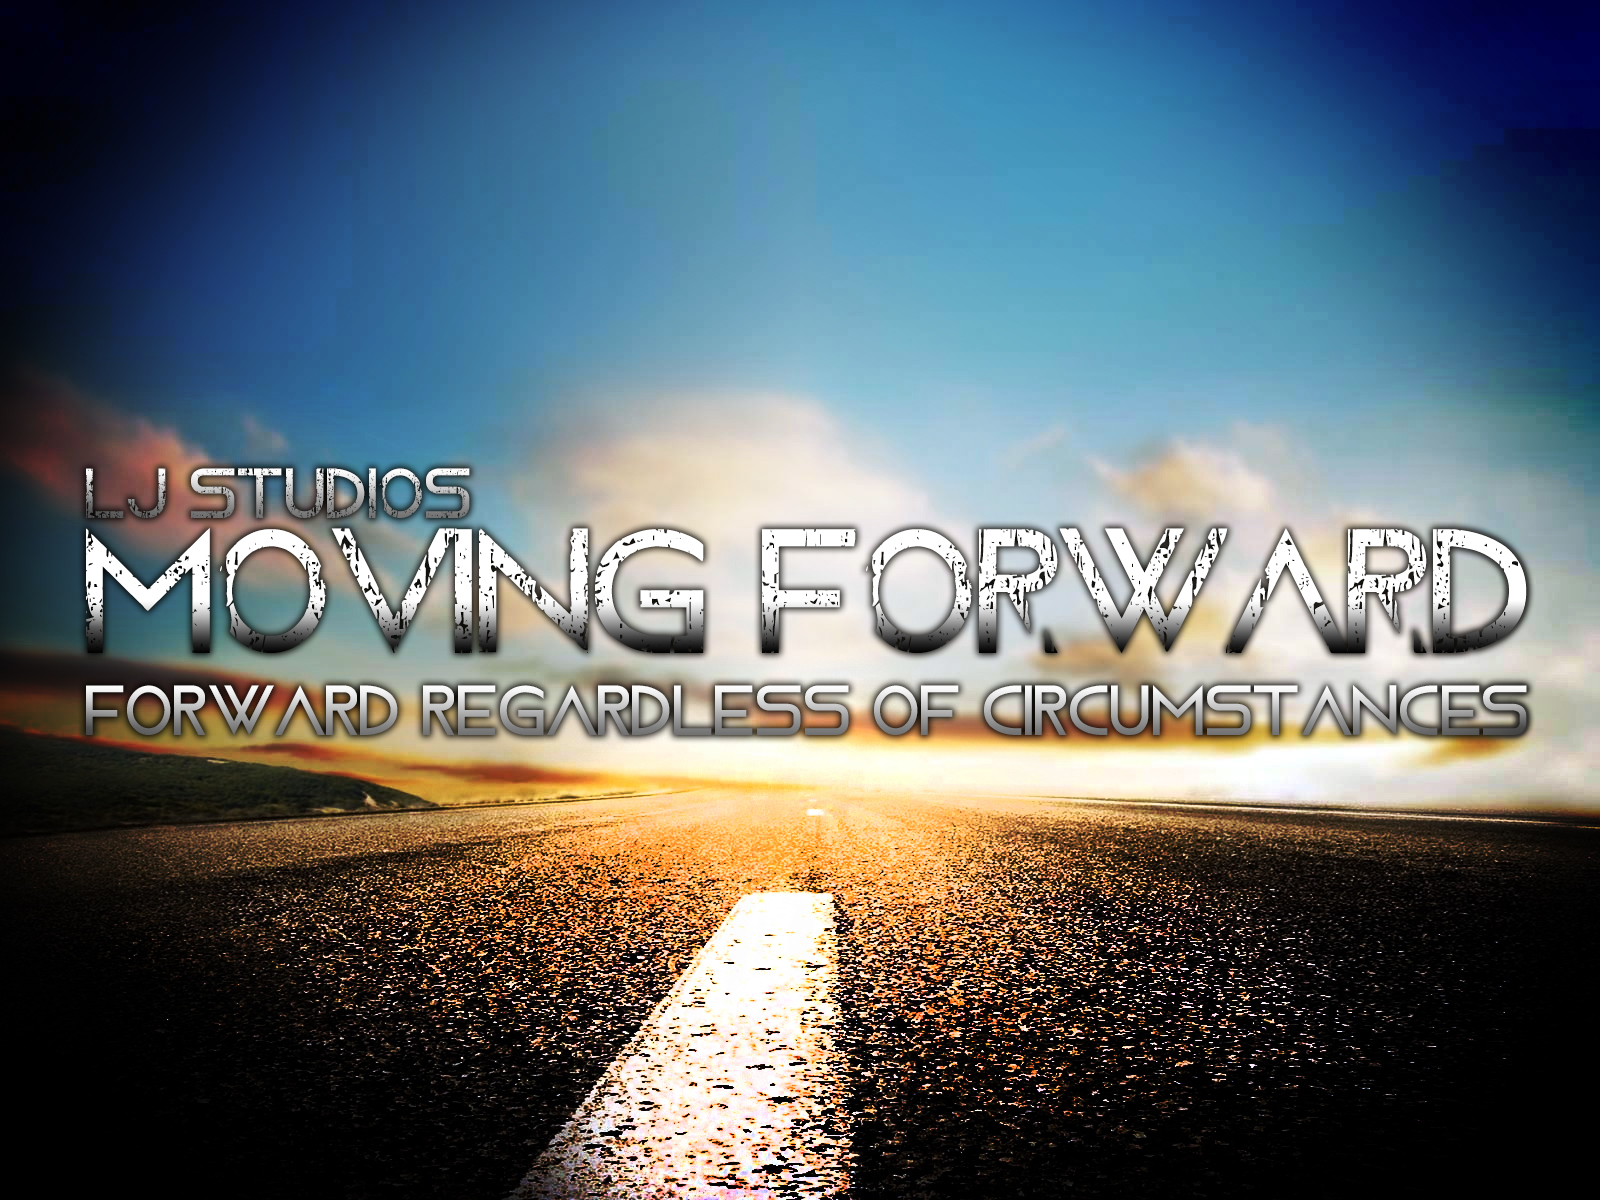 Moving Forward font